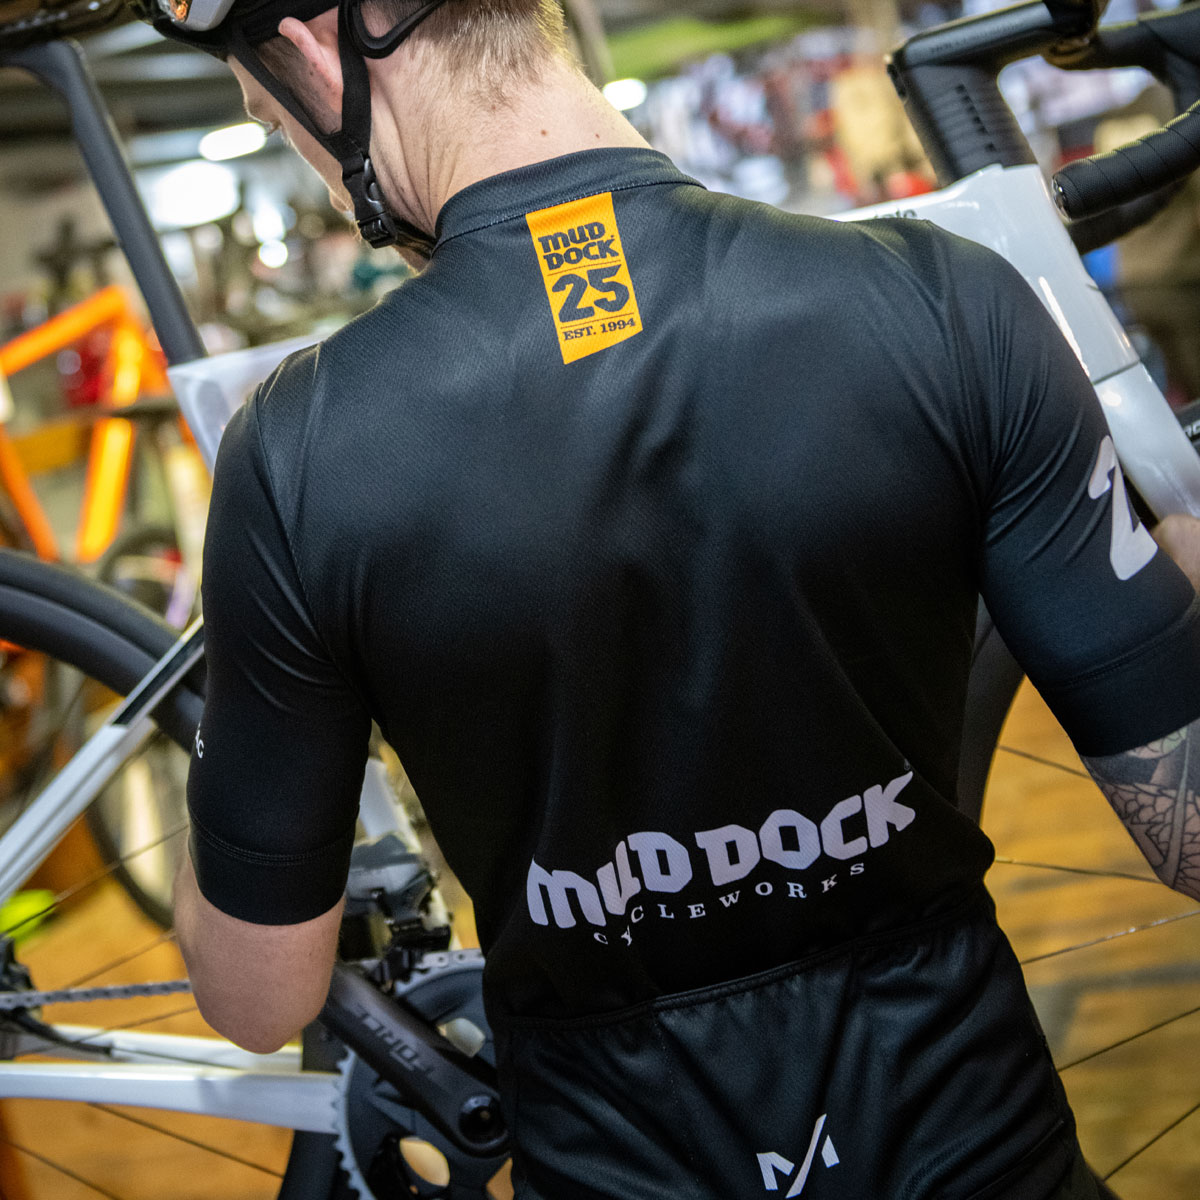 Mud Dock cycling jersey